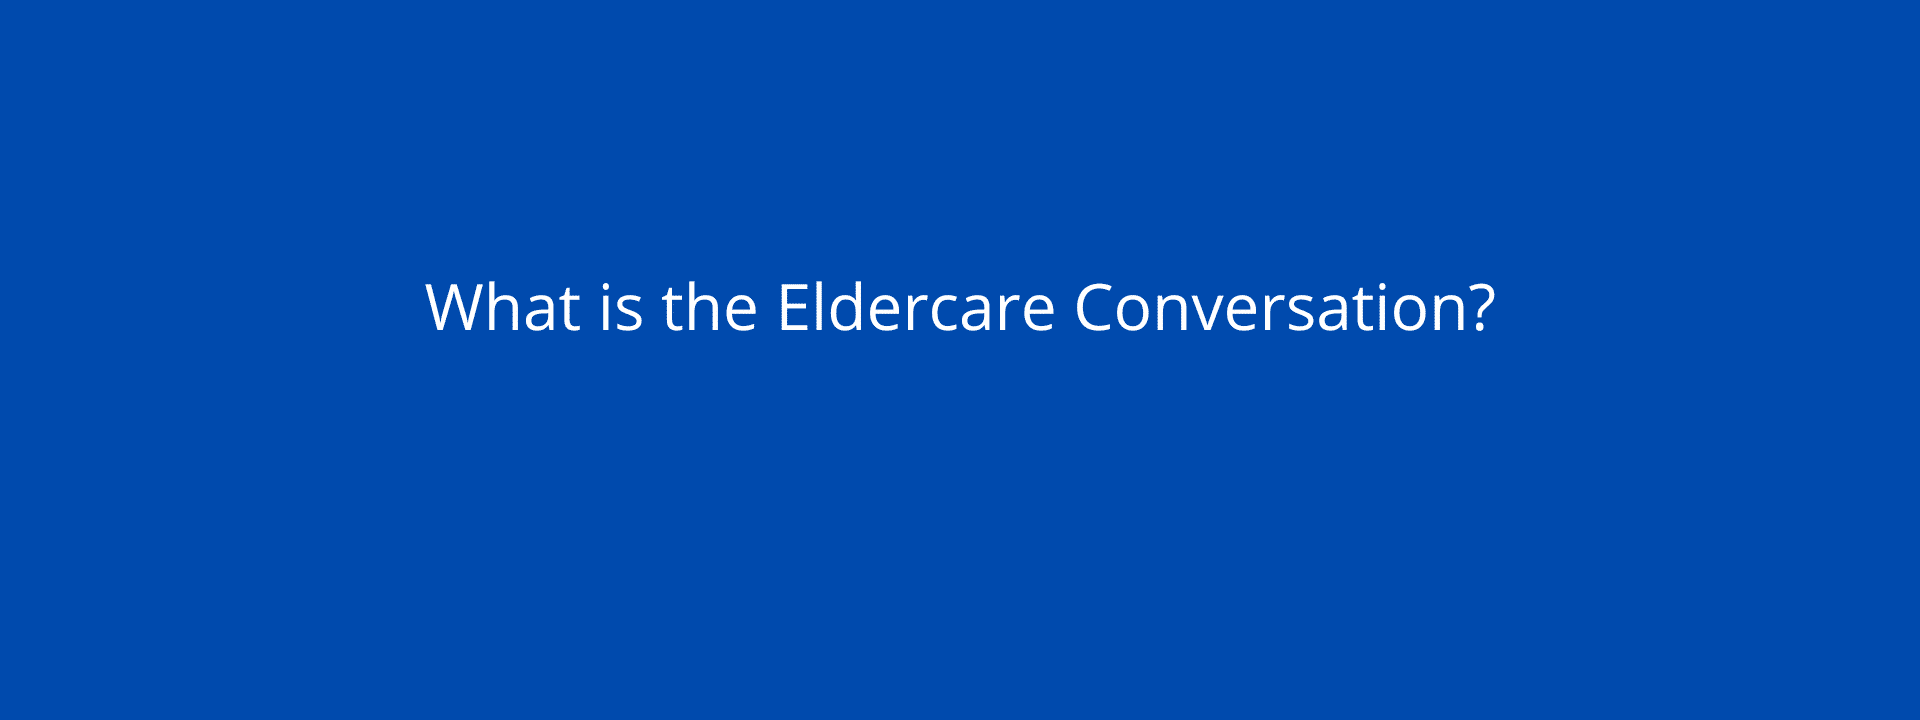 What is the Eldercare Conversation?